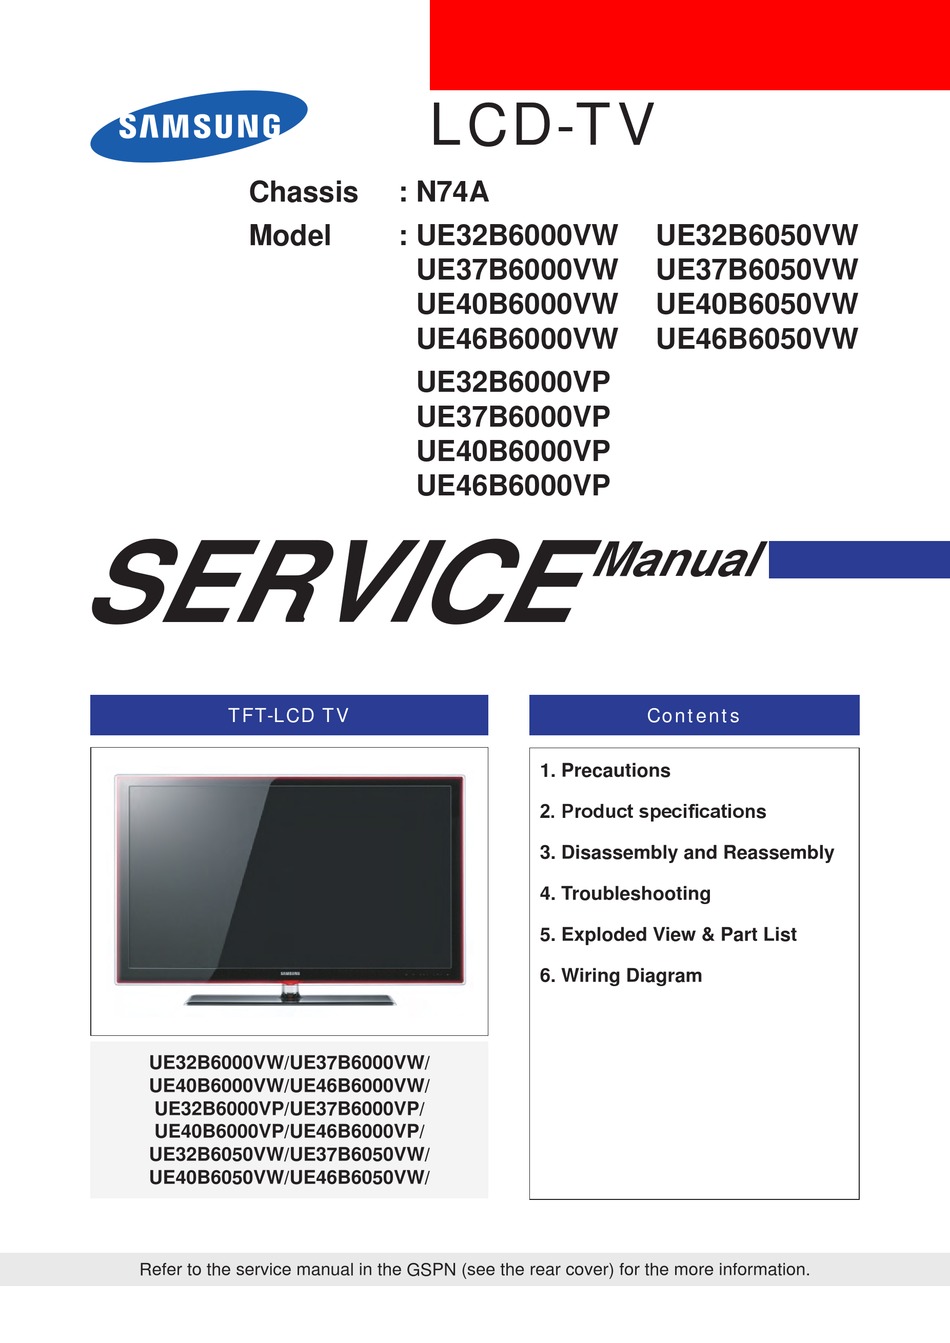 SAMSUNG UE32B6000VW SERVICE MANUAL Pdf Download | ManualsLib